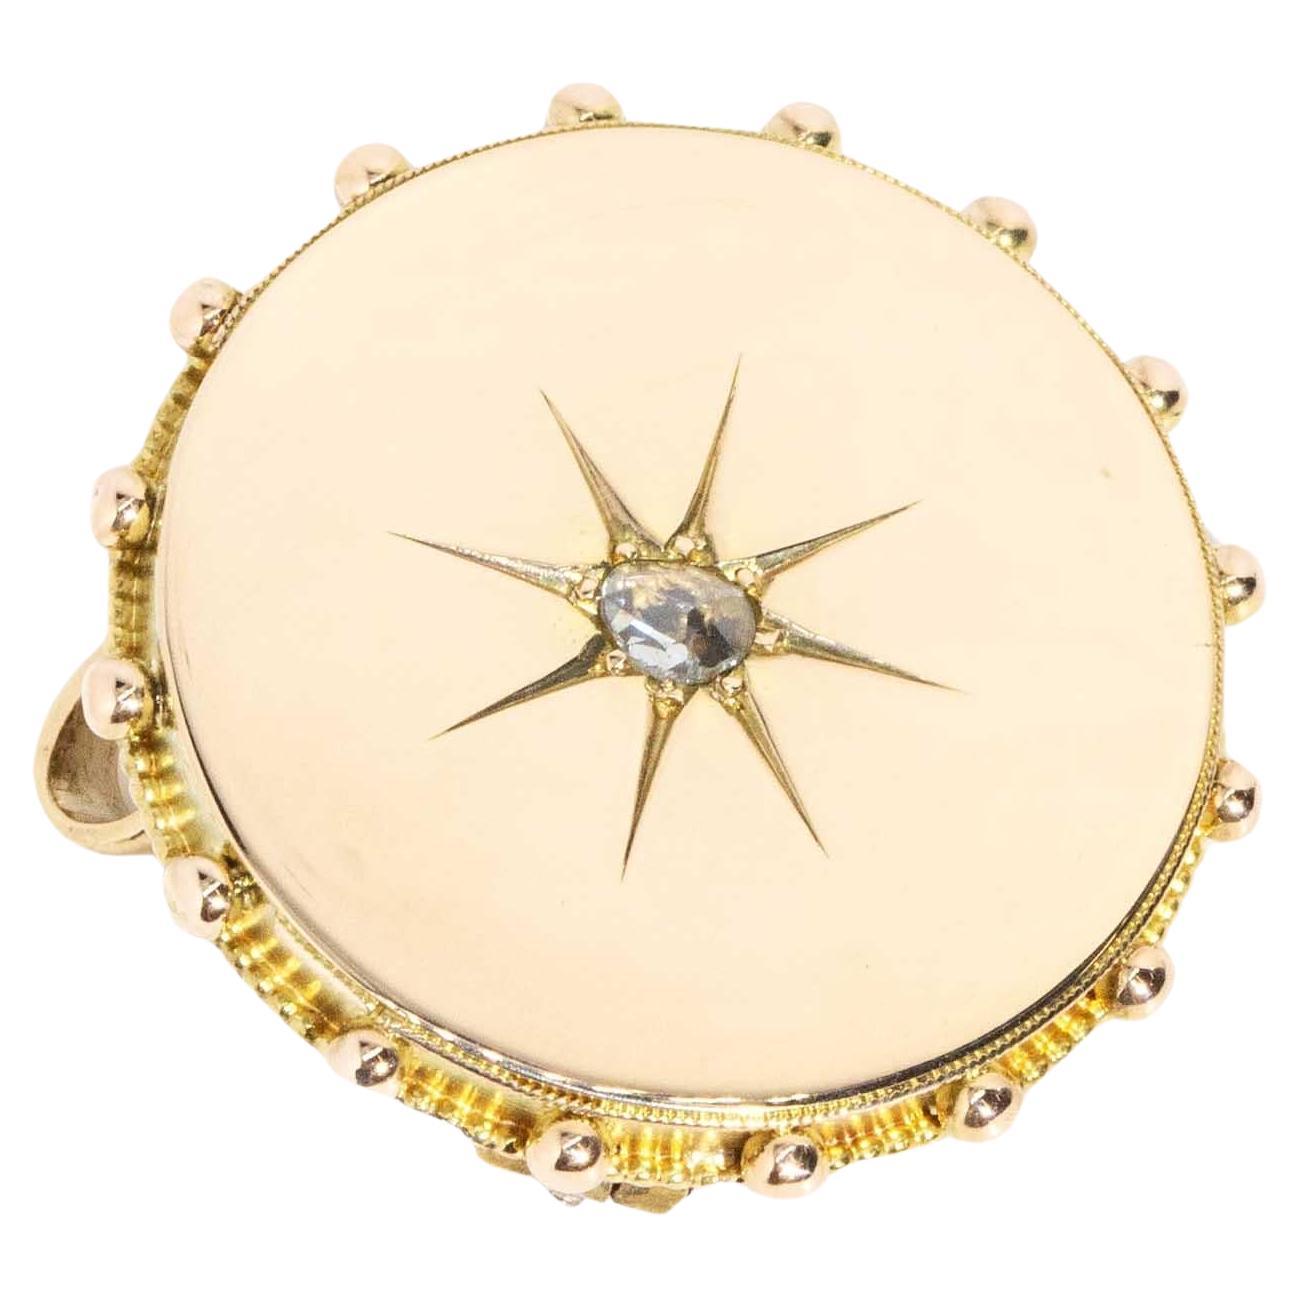 Broche et pendentif victoriens anciens en or 15 carats sertis de diamants taillés en rose